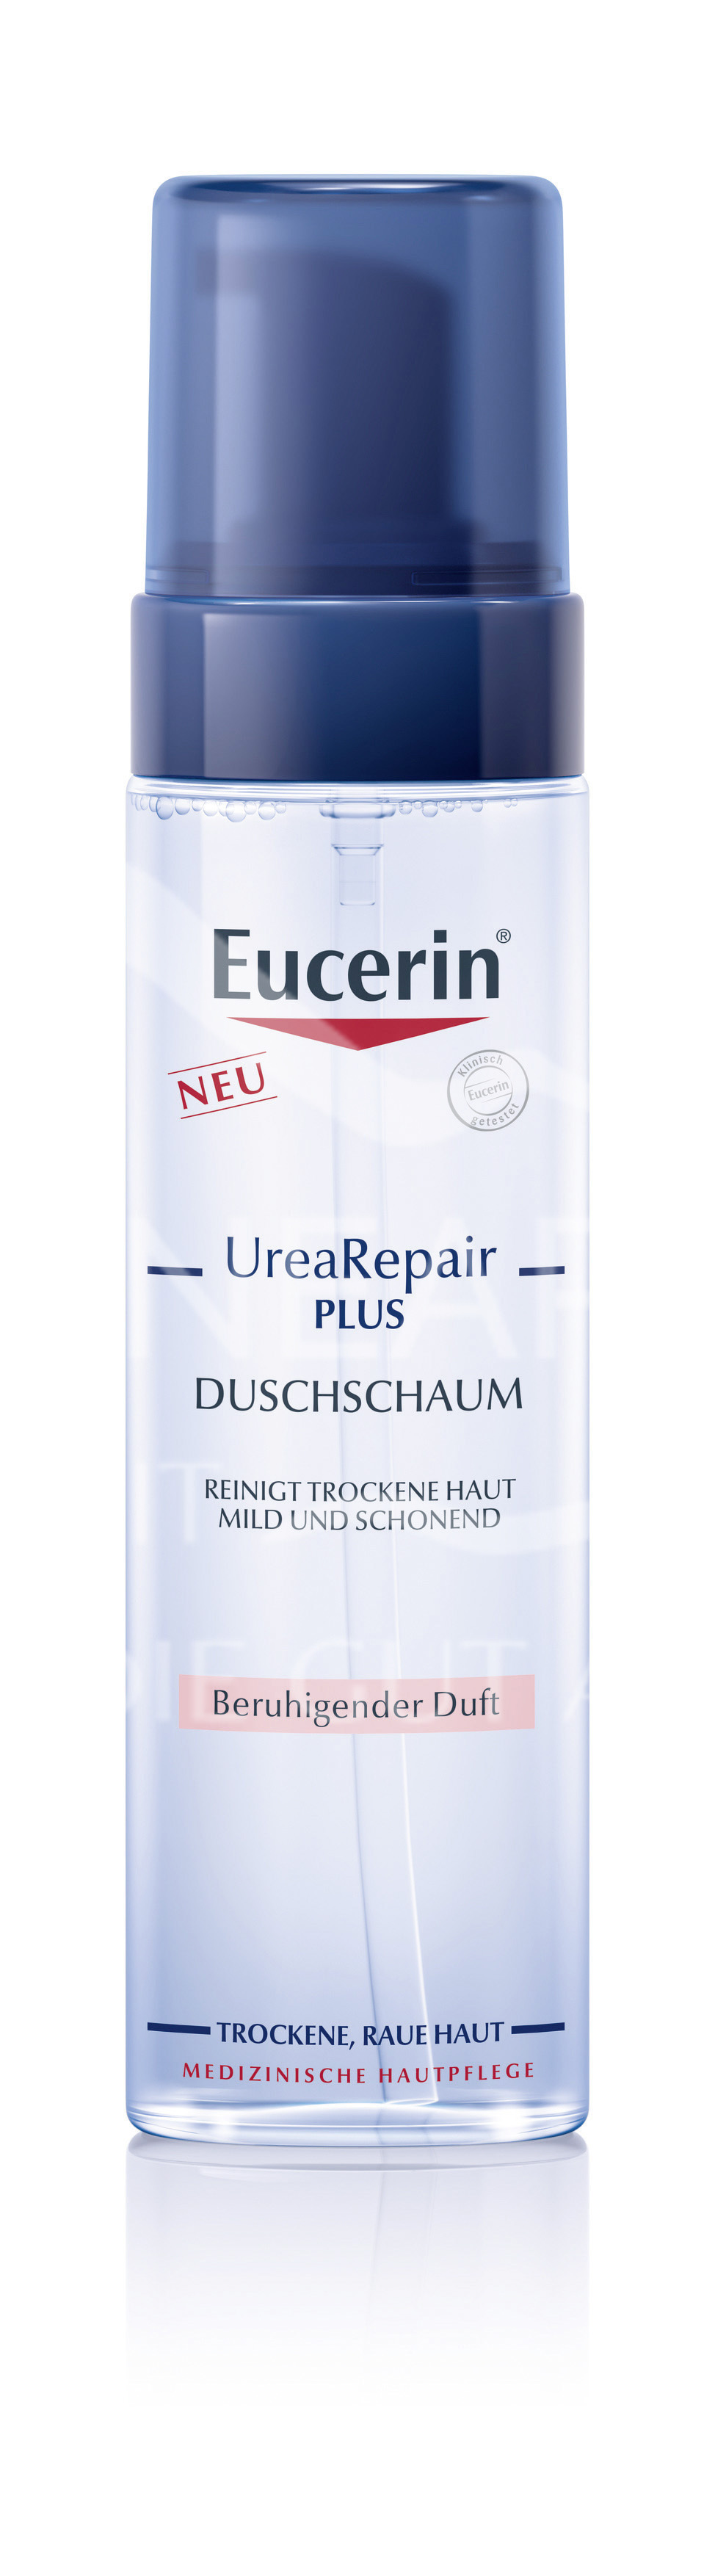 Eucerin® UreaRepair PLUS Duschschaum Beruhigender Duft